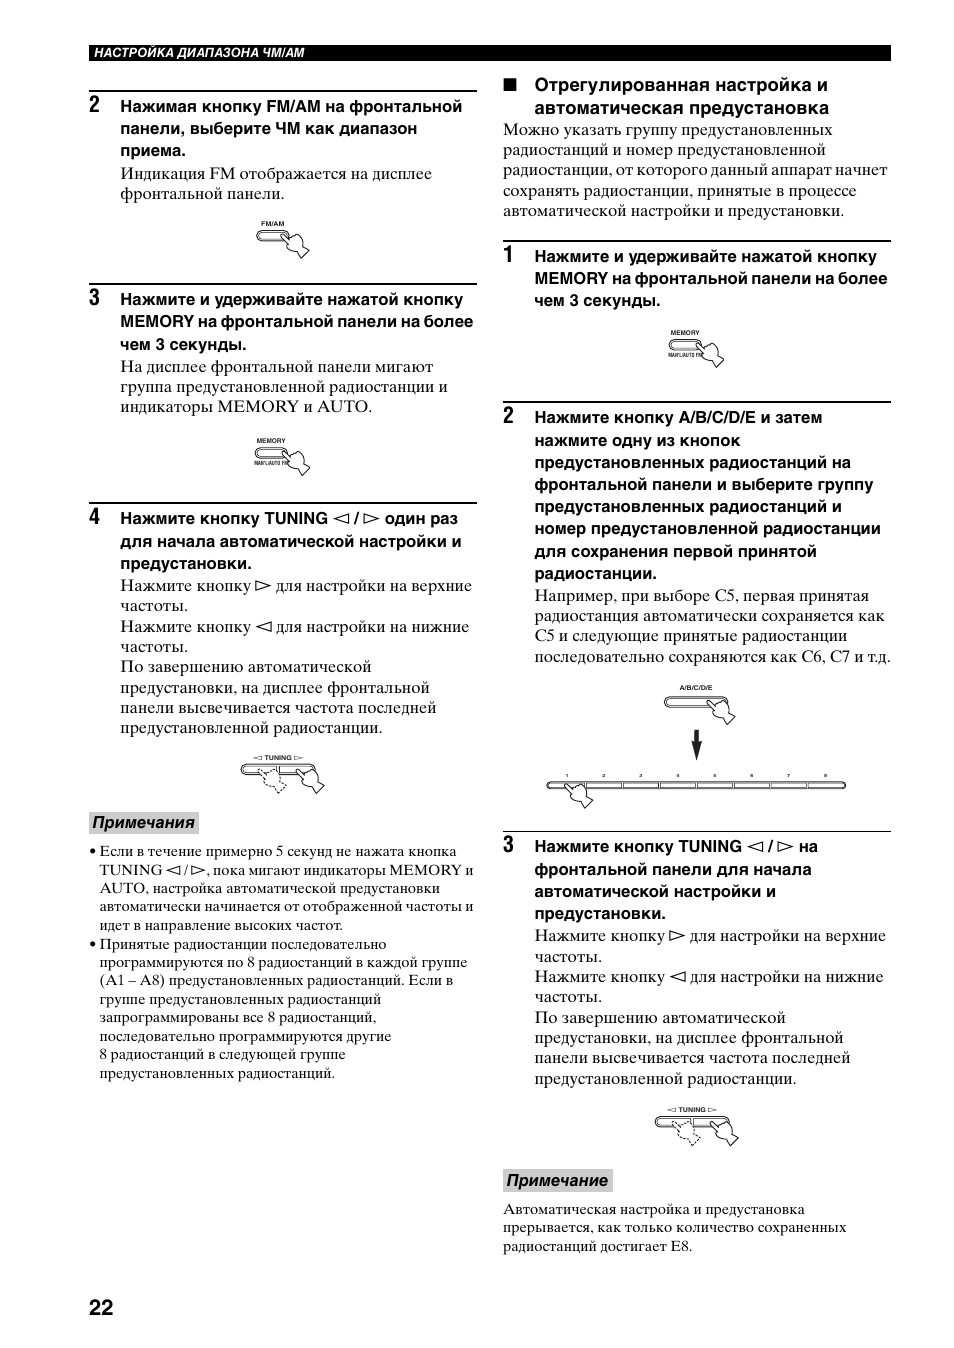 Примечания, Примечание | Yamaha RX-397 User Manual | Page 194 / 206